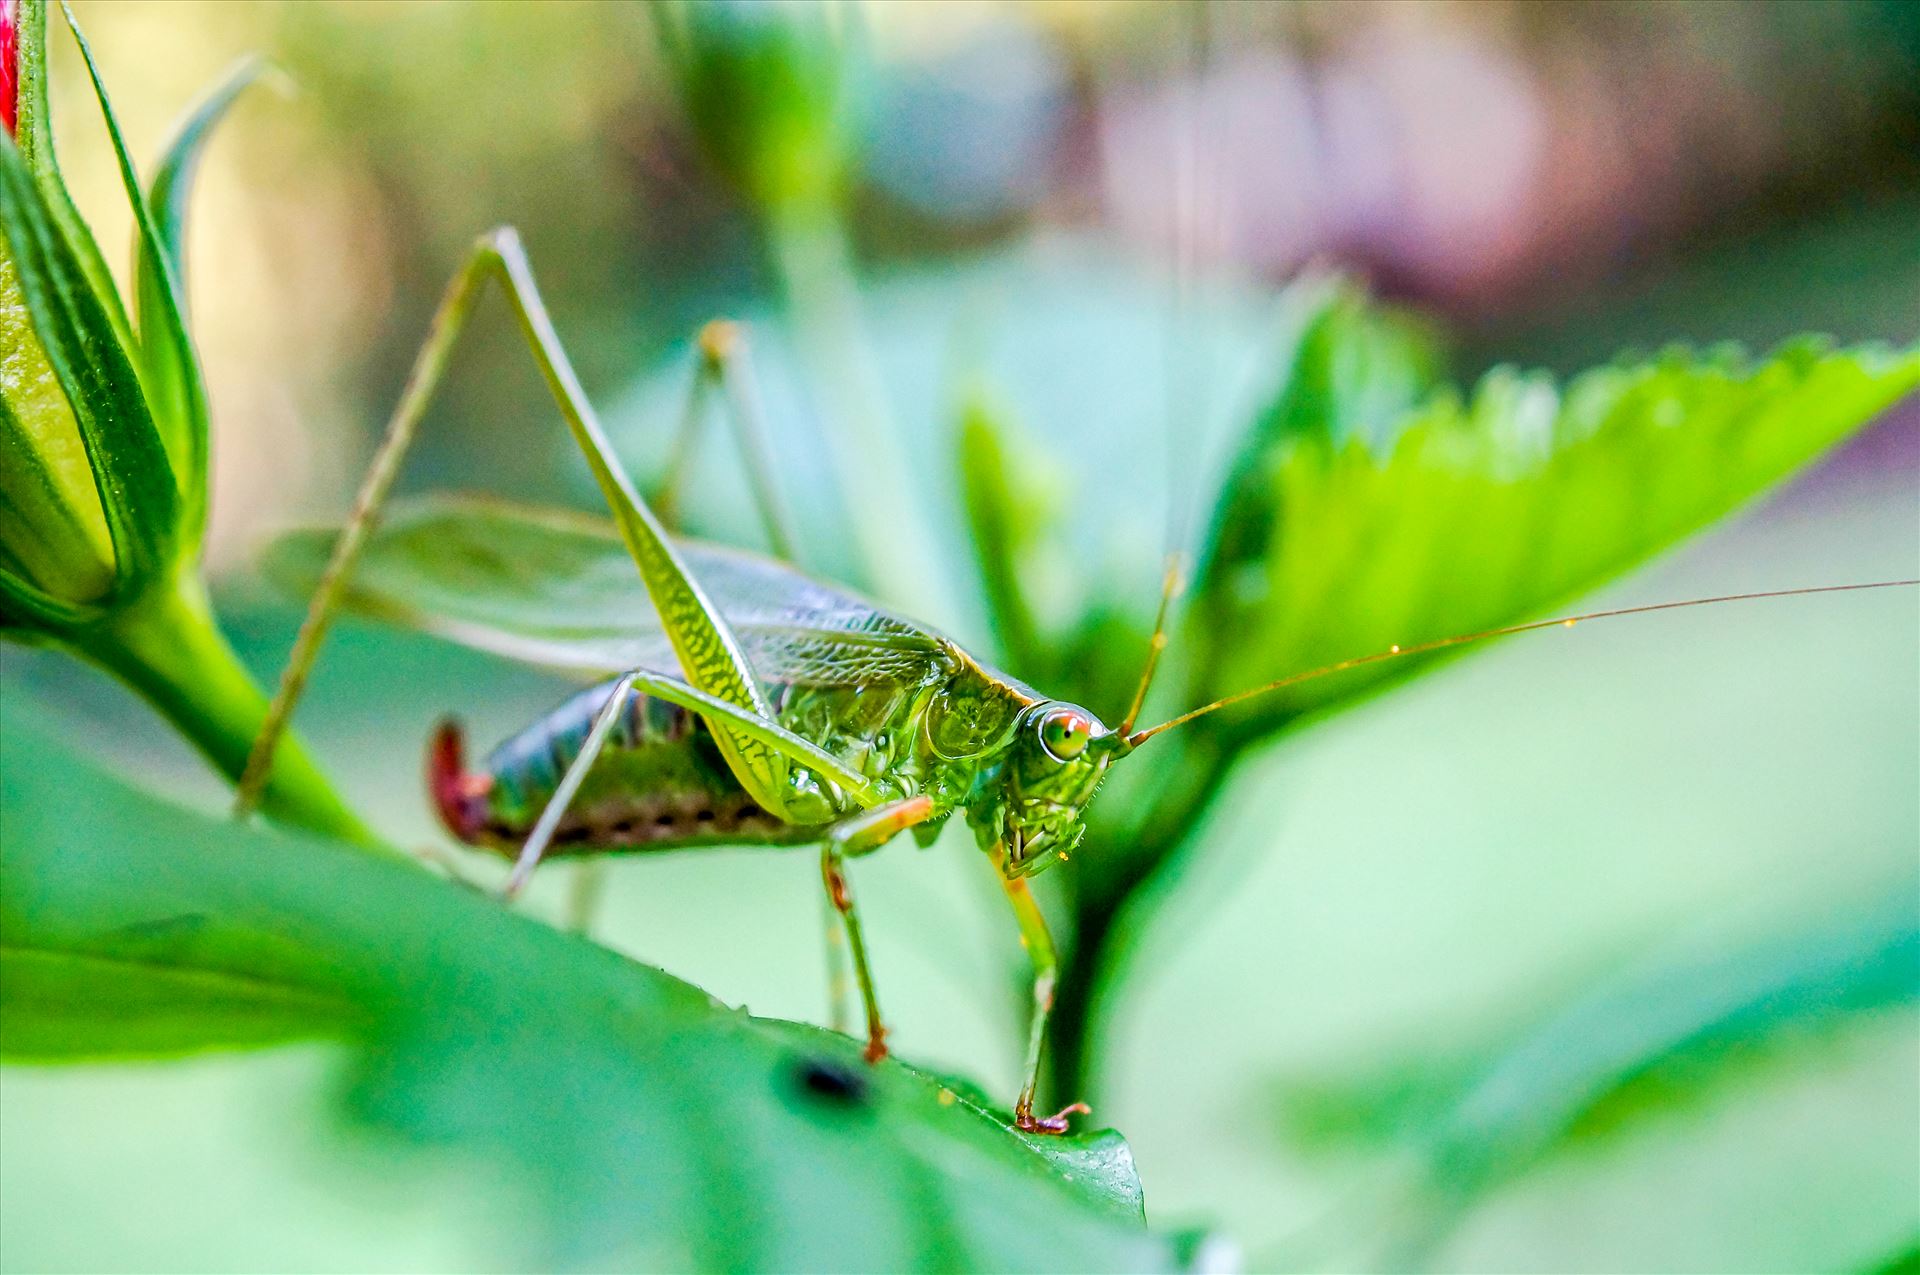 Grasshopper on leaf.jpg  by ArturoVazquez